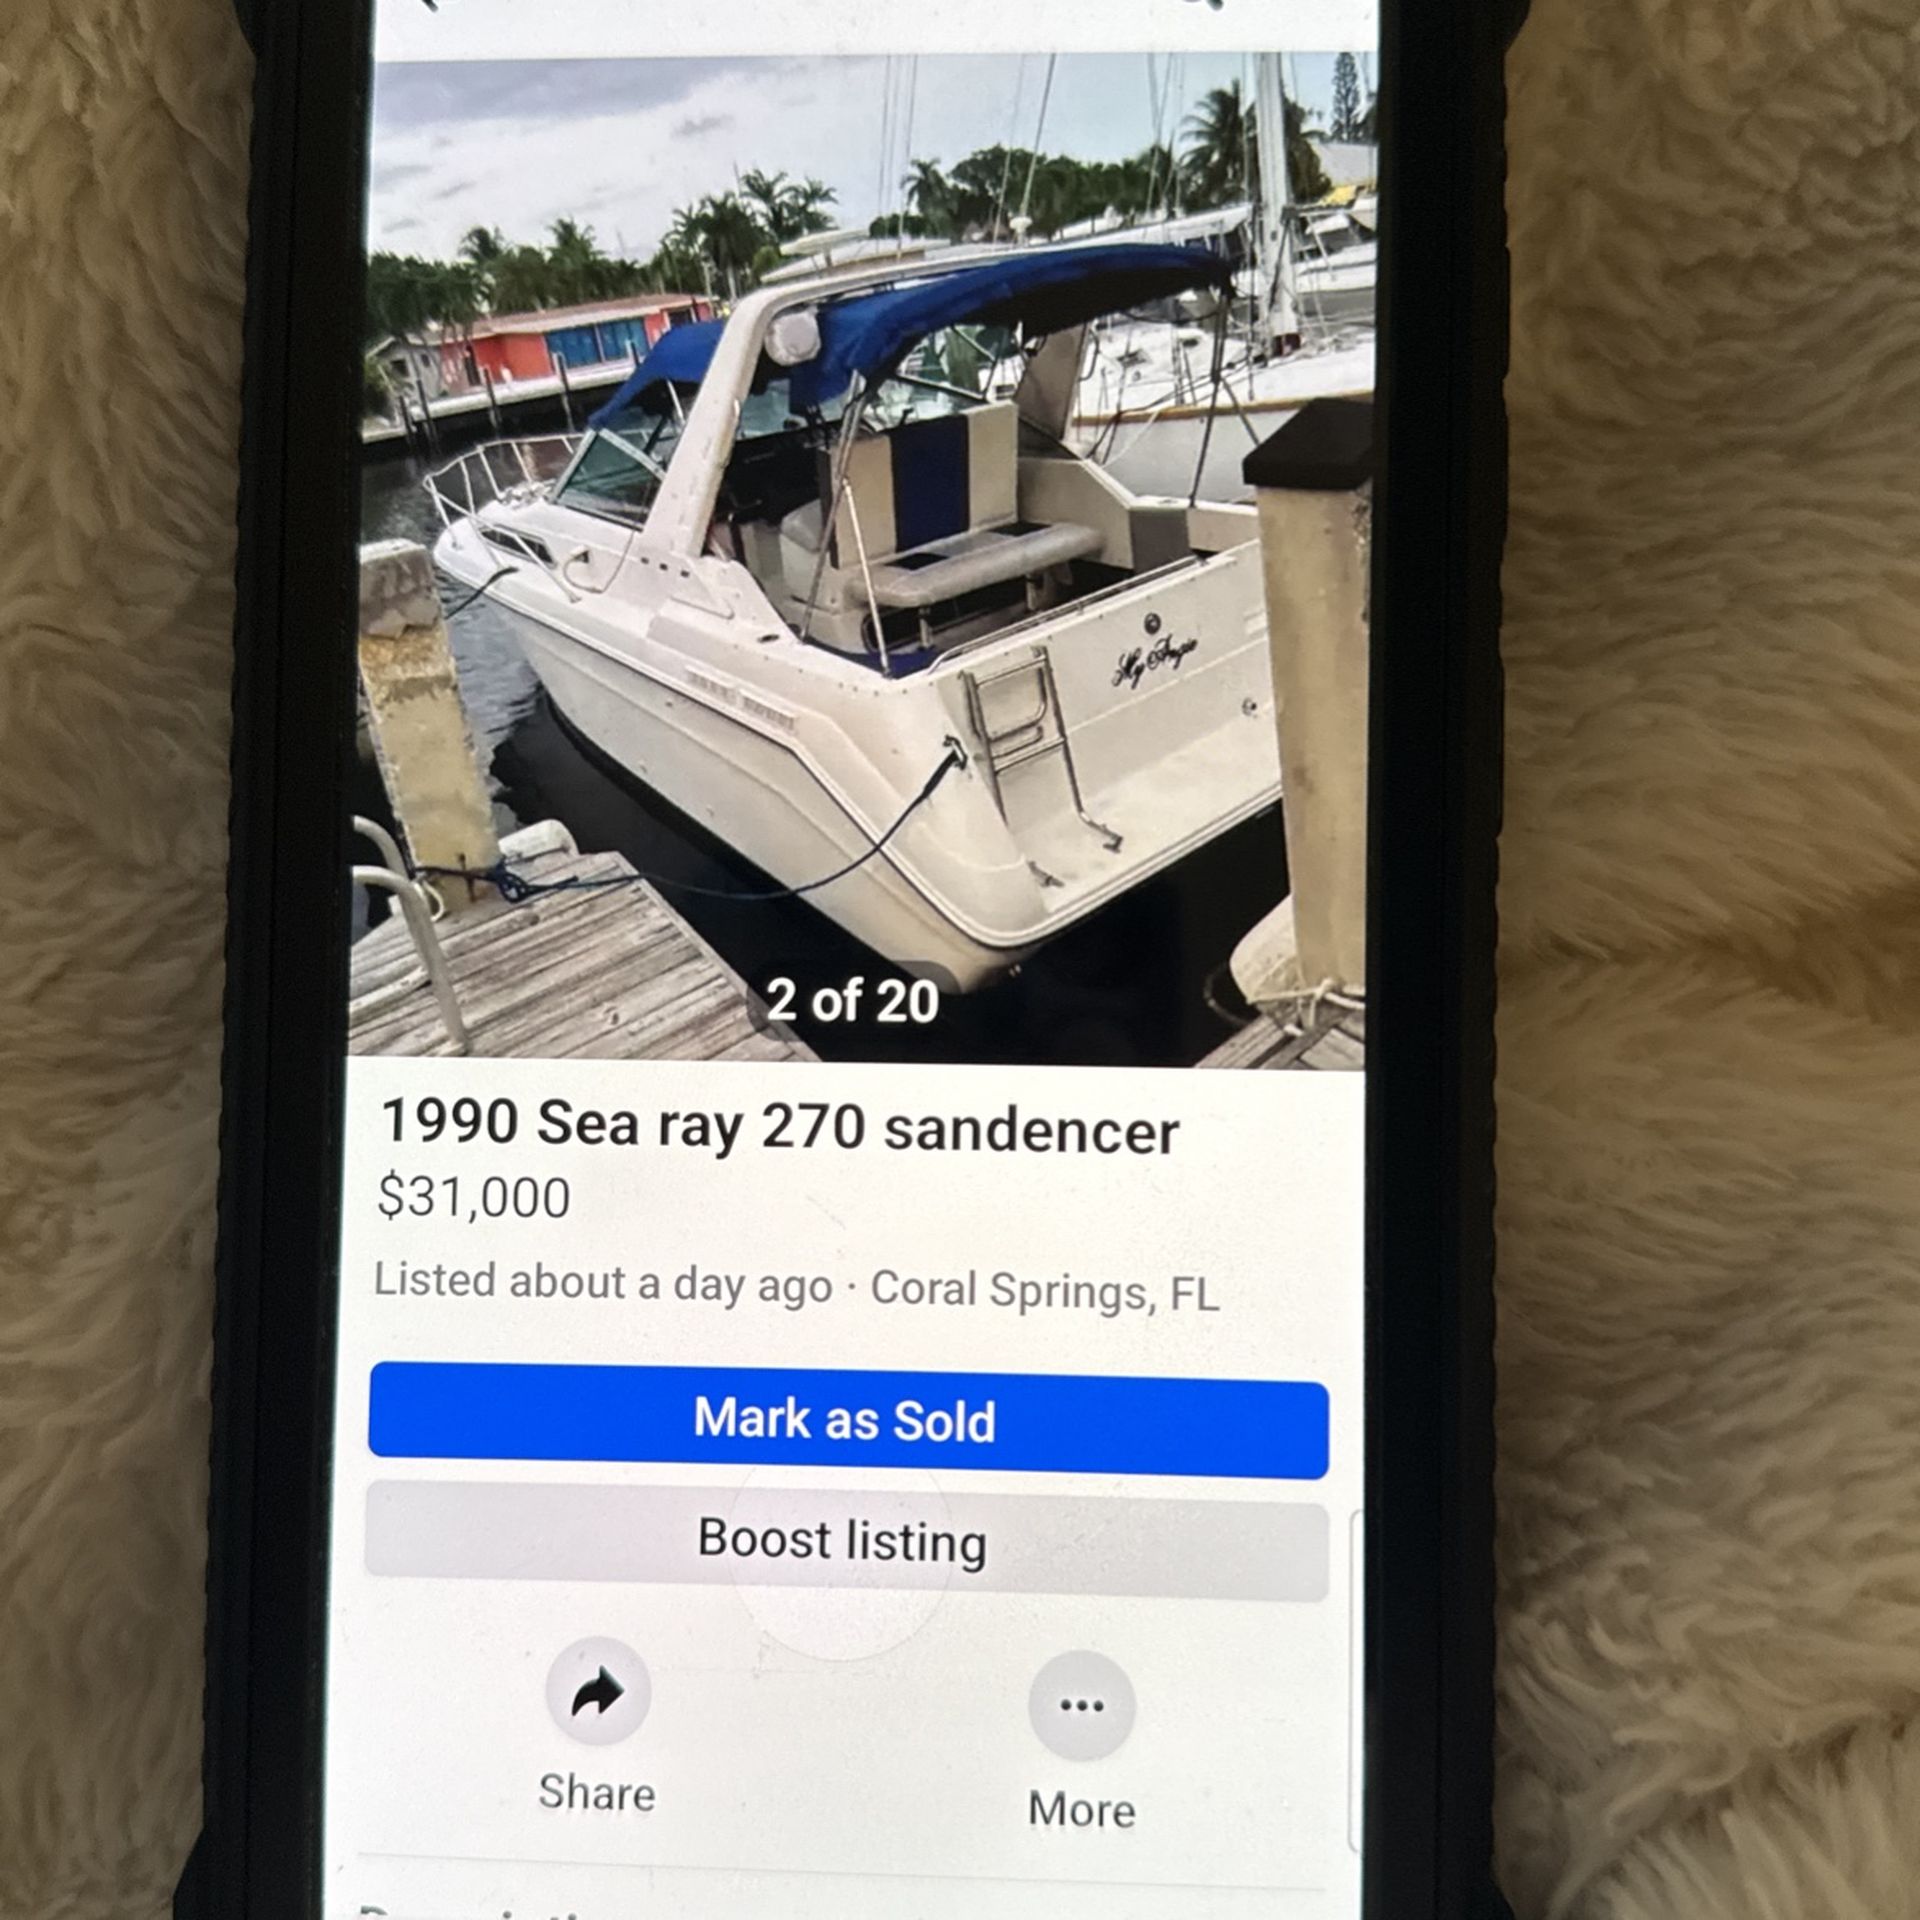 1990 Sea ray 270 sandencer